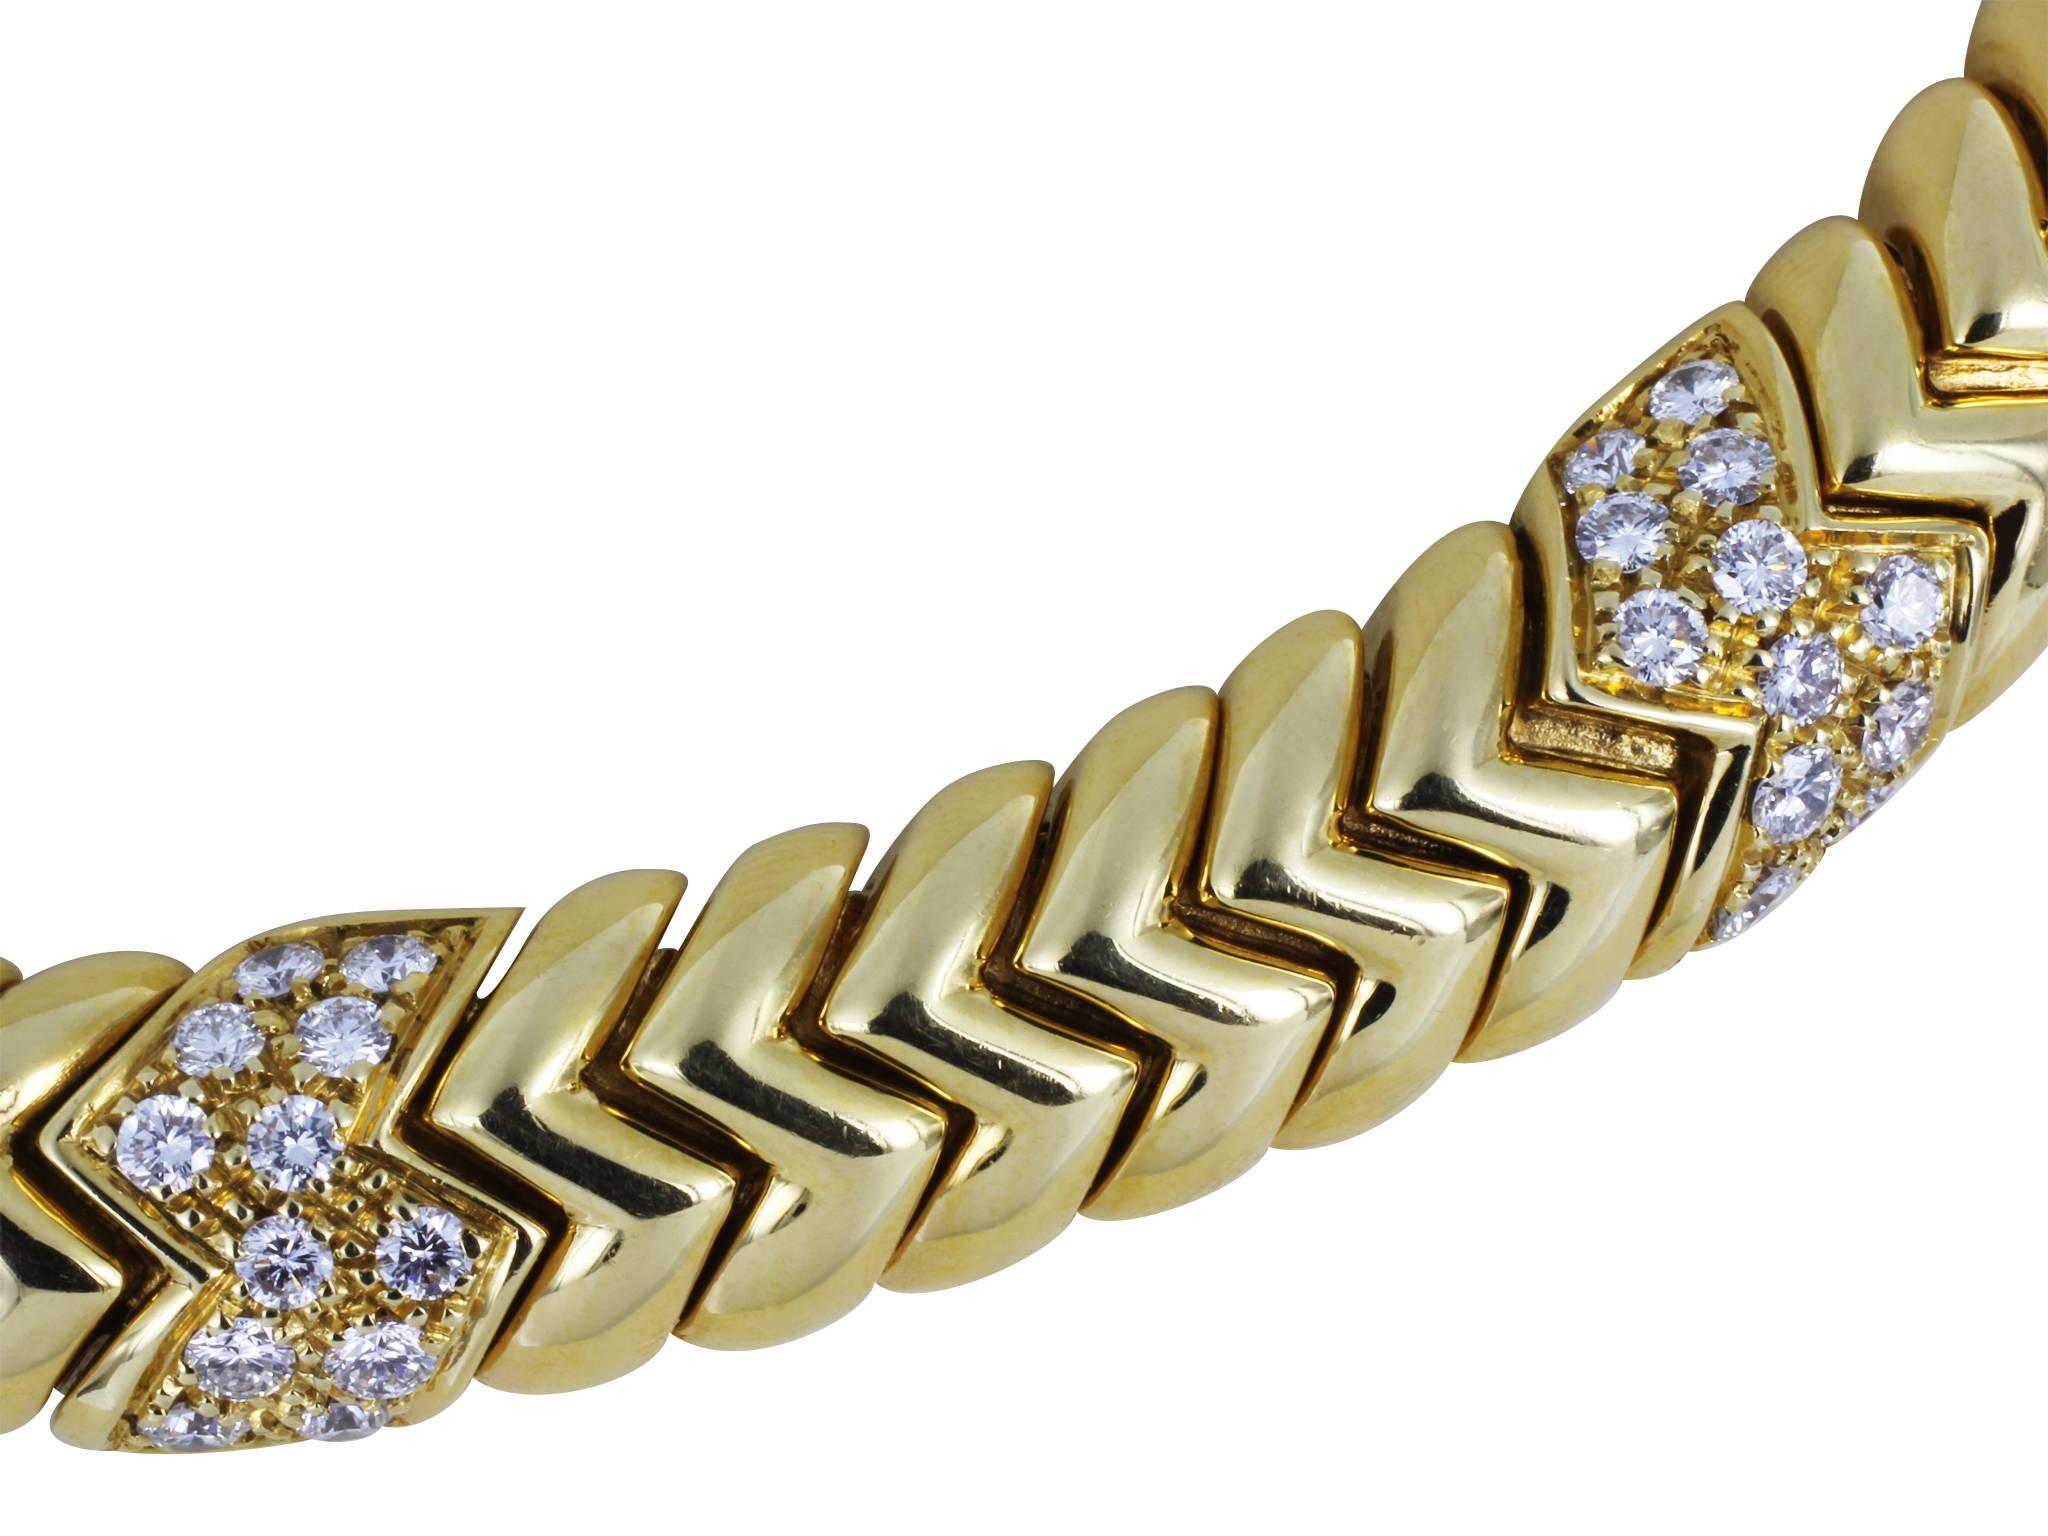 Estate Bulgari 18 karat yellow gold Spiga collar style necklace, consisting of 60 bead set round brilliant cut diamonds having a total approximate weight of 3.90 carats.